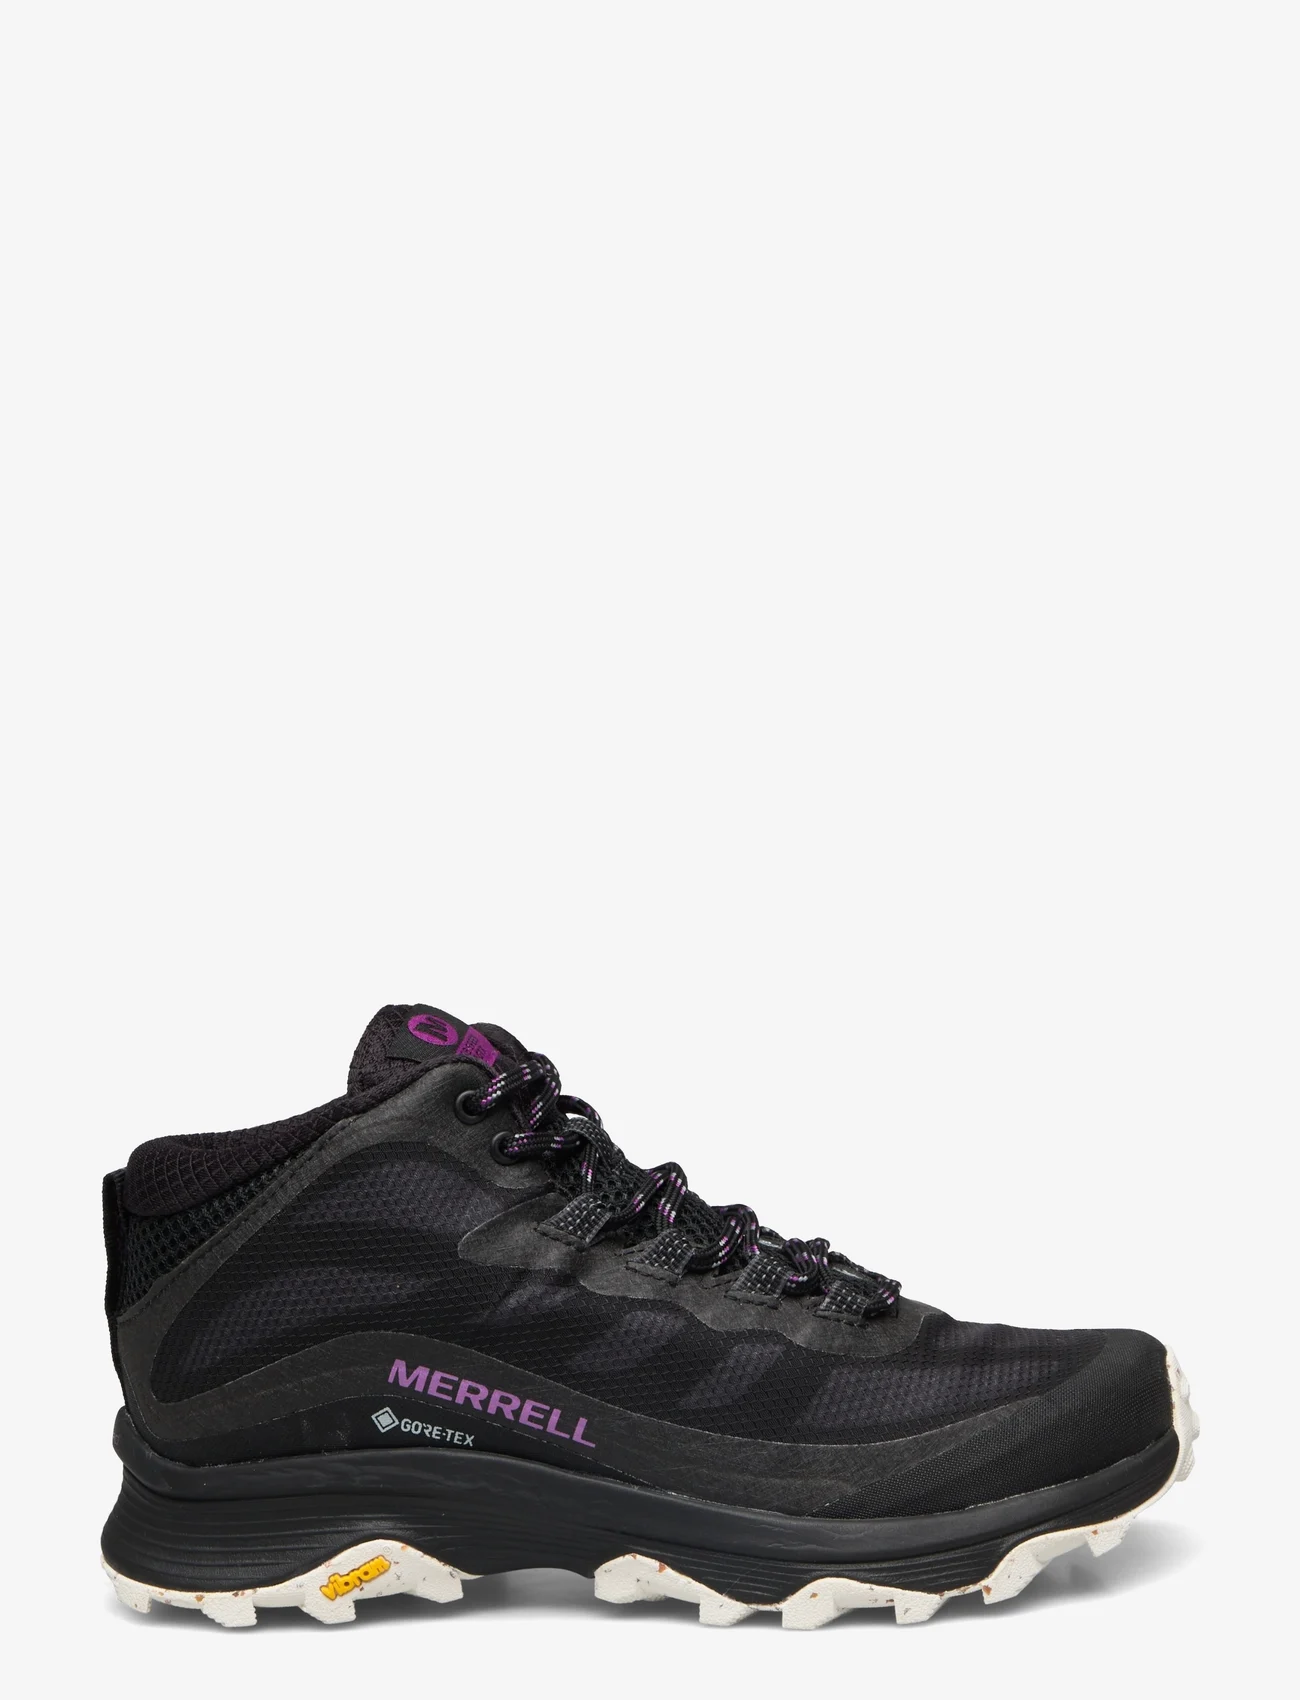 Merrell - Women's Moab Speed Mid GTX - Black - hiking shoes - black - 1